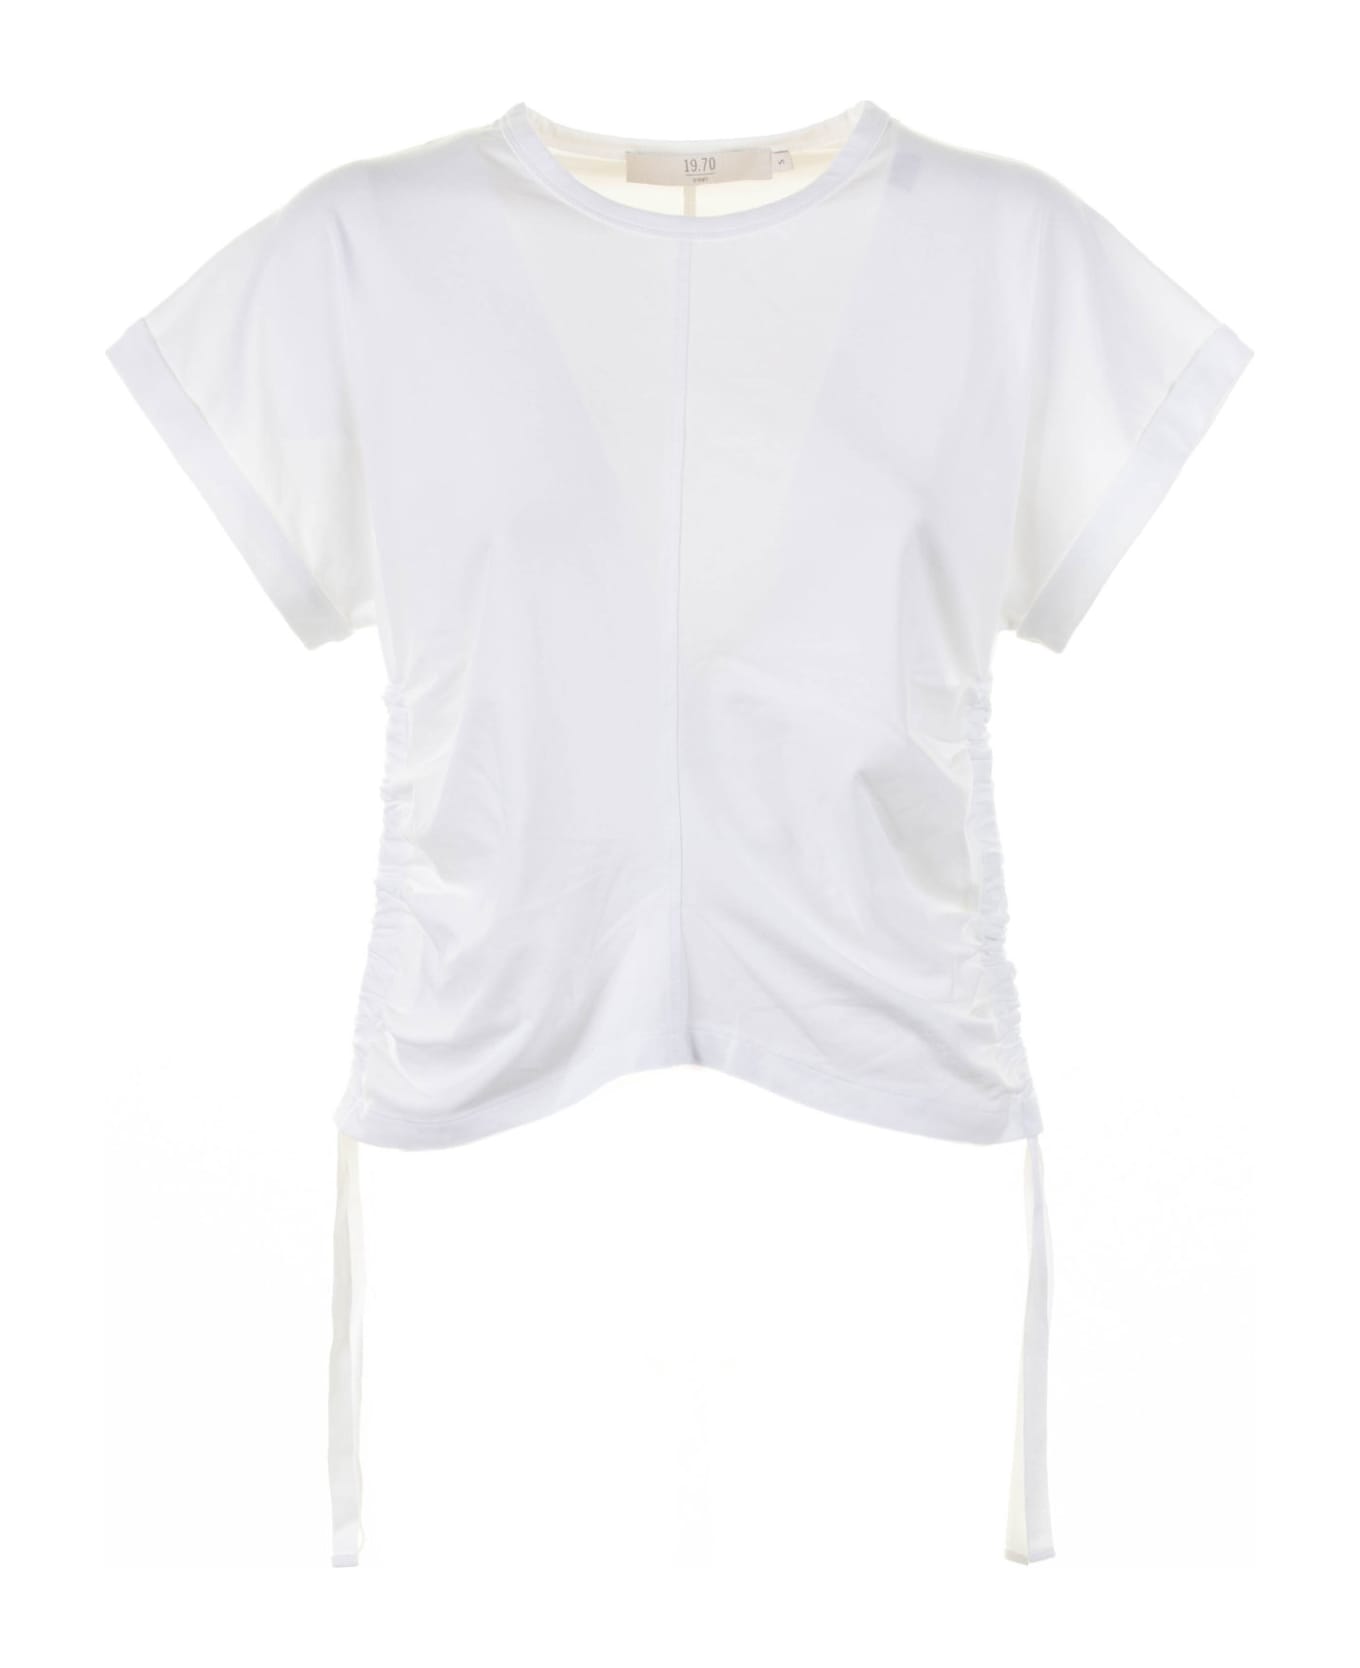 19.70 Nineteen Seventy T-shirt Whit Adjustable Side Gathering - BIANCO Tシャツ